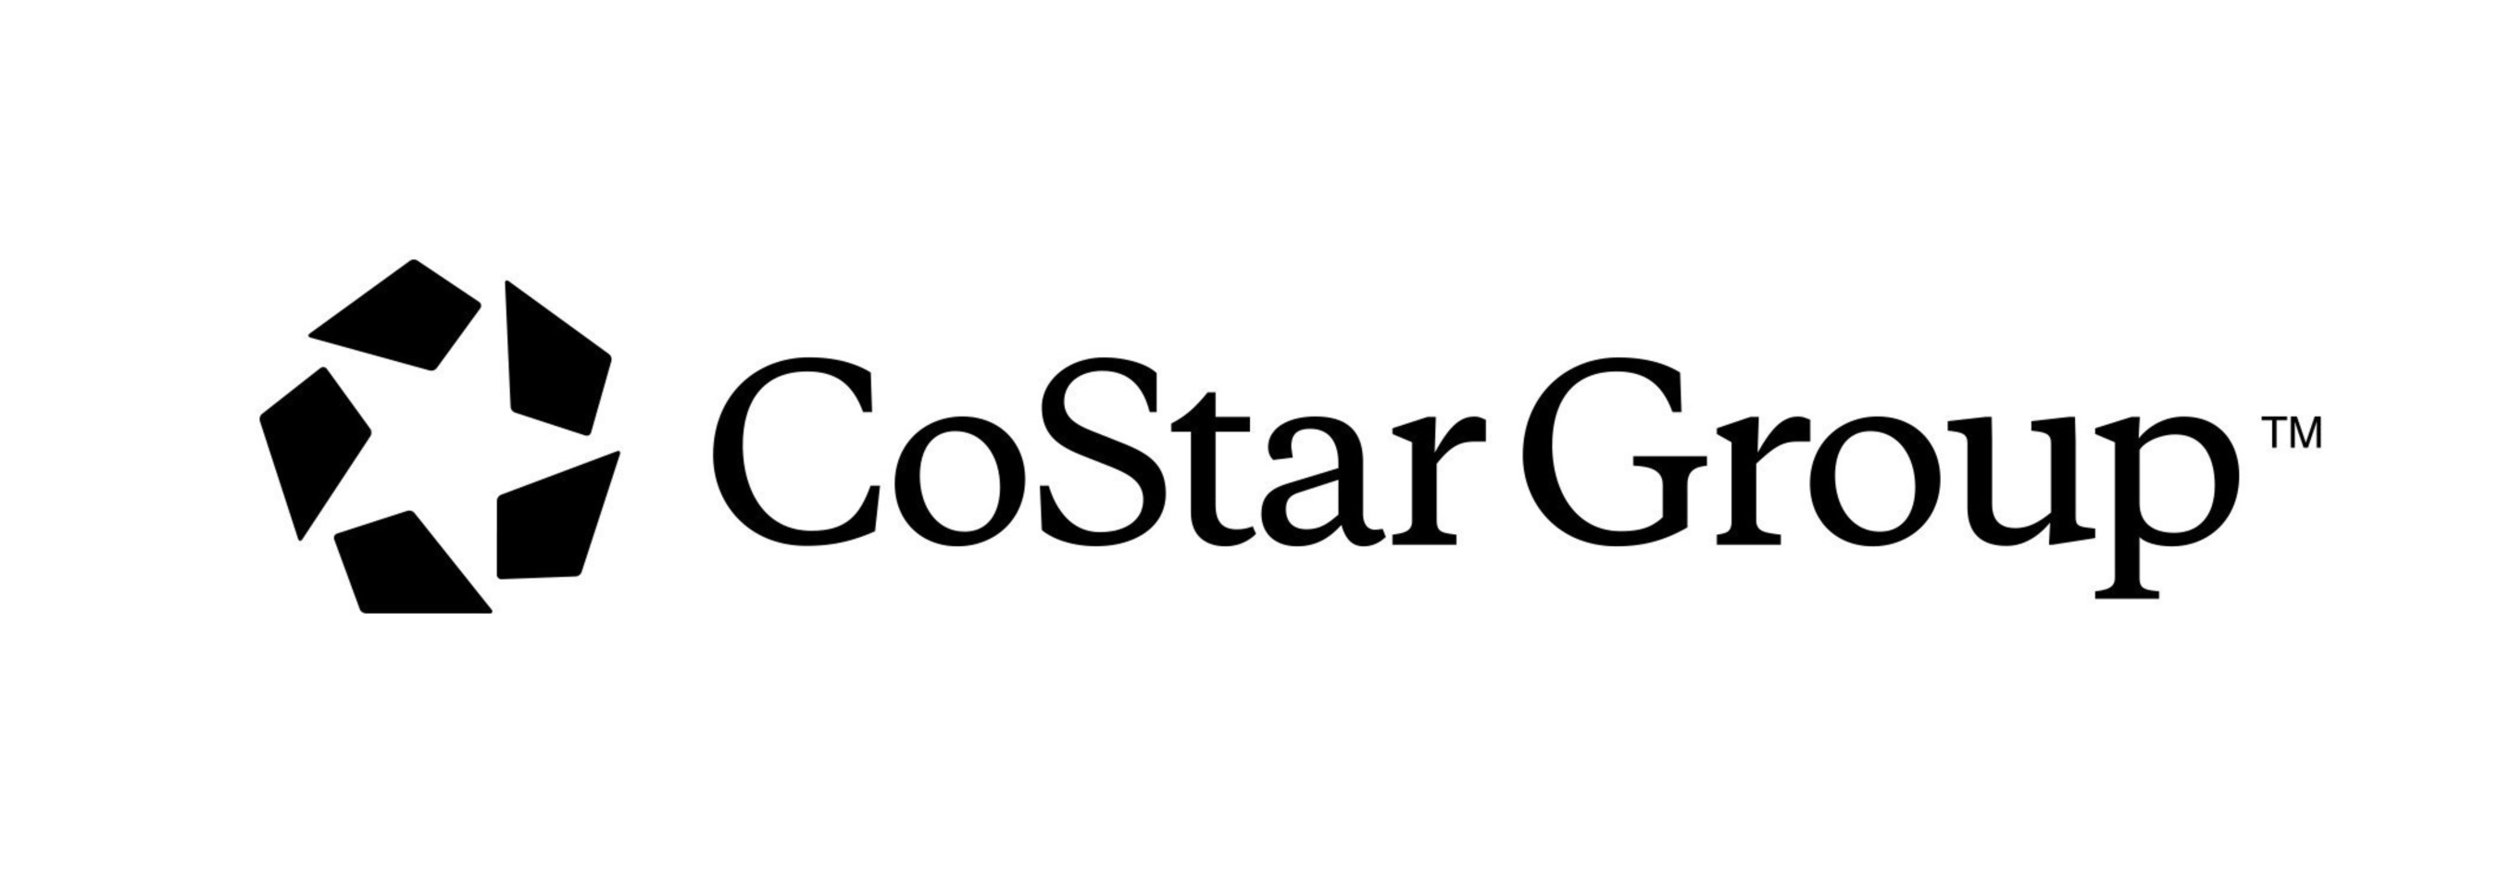 costar_group_logo.jpg